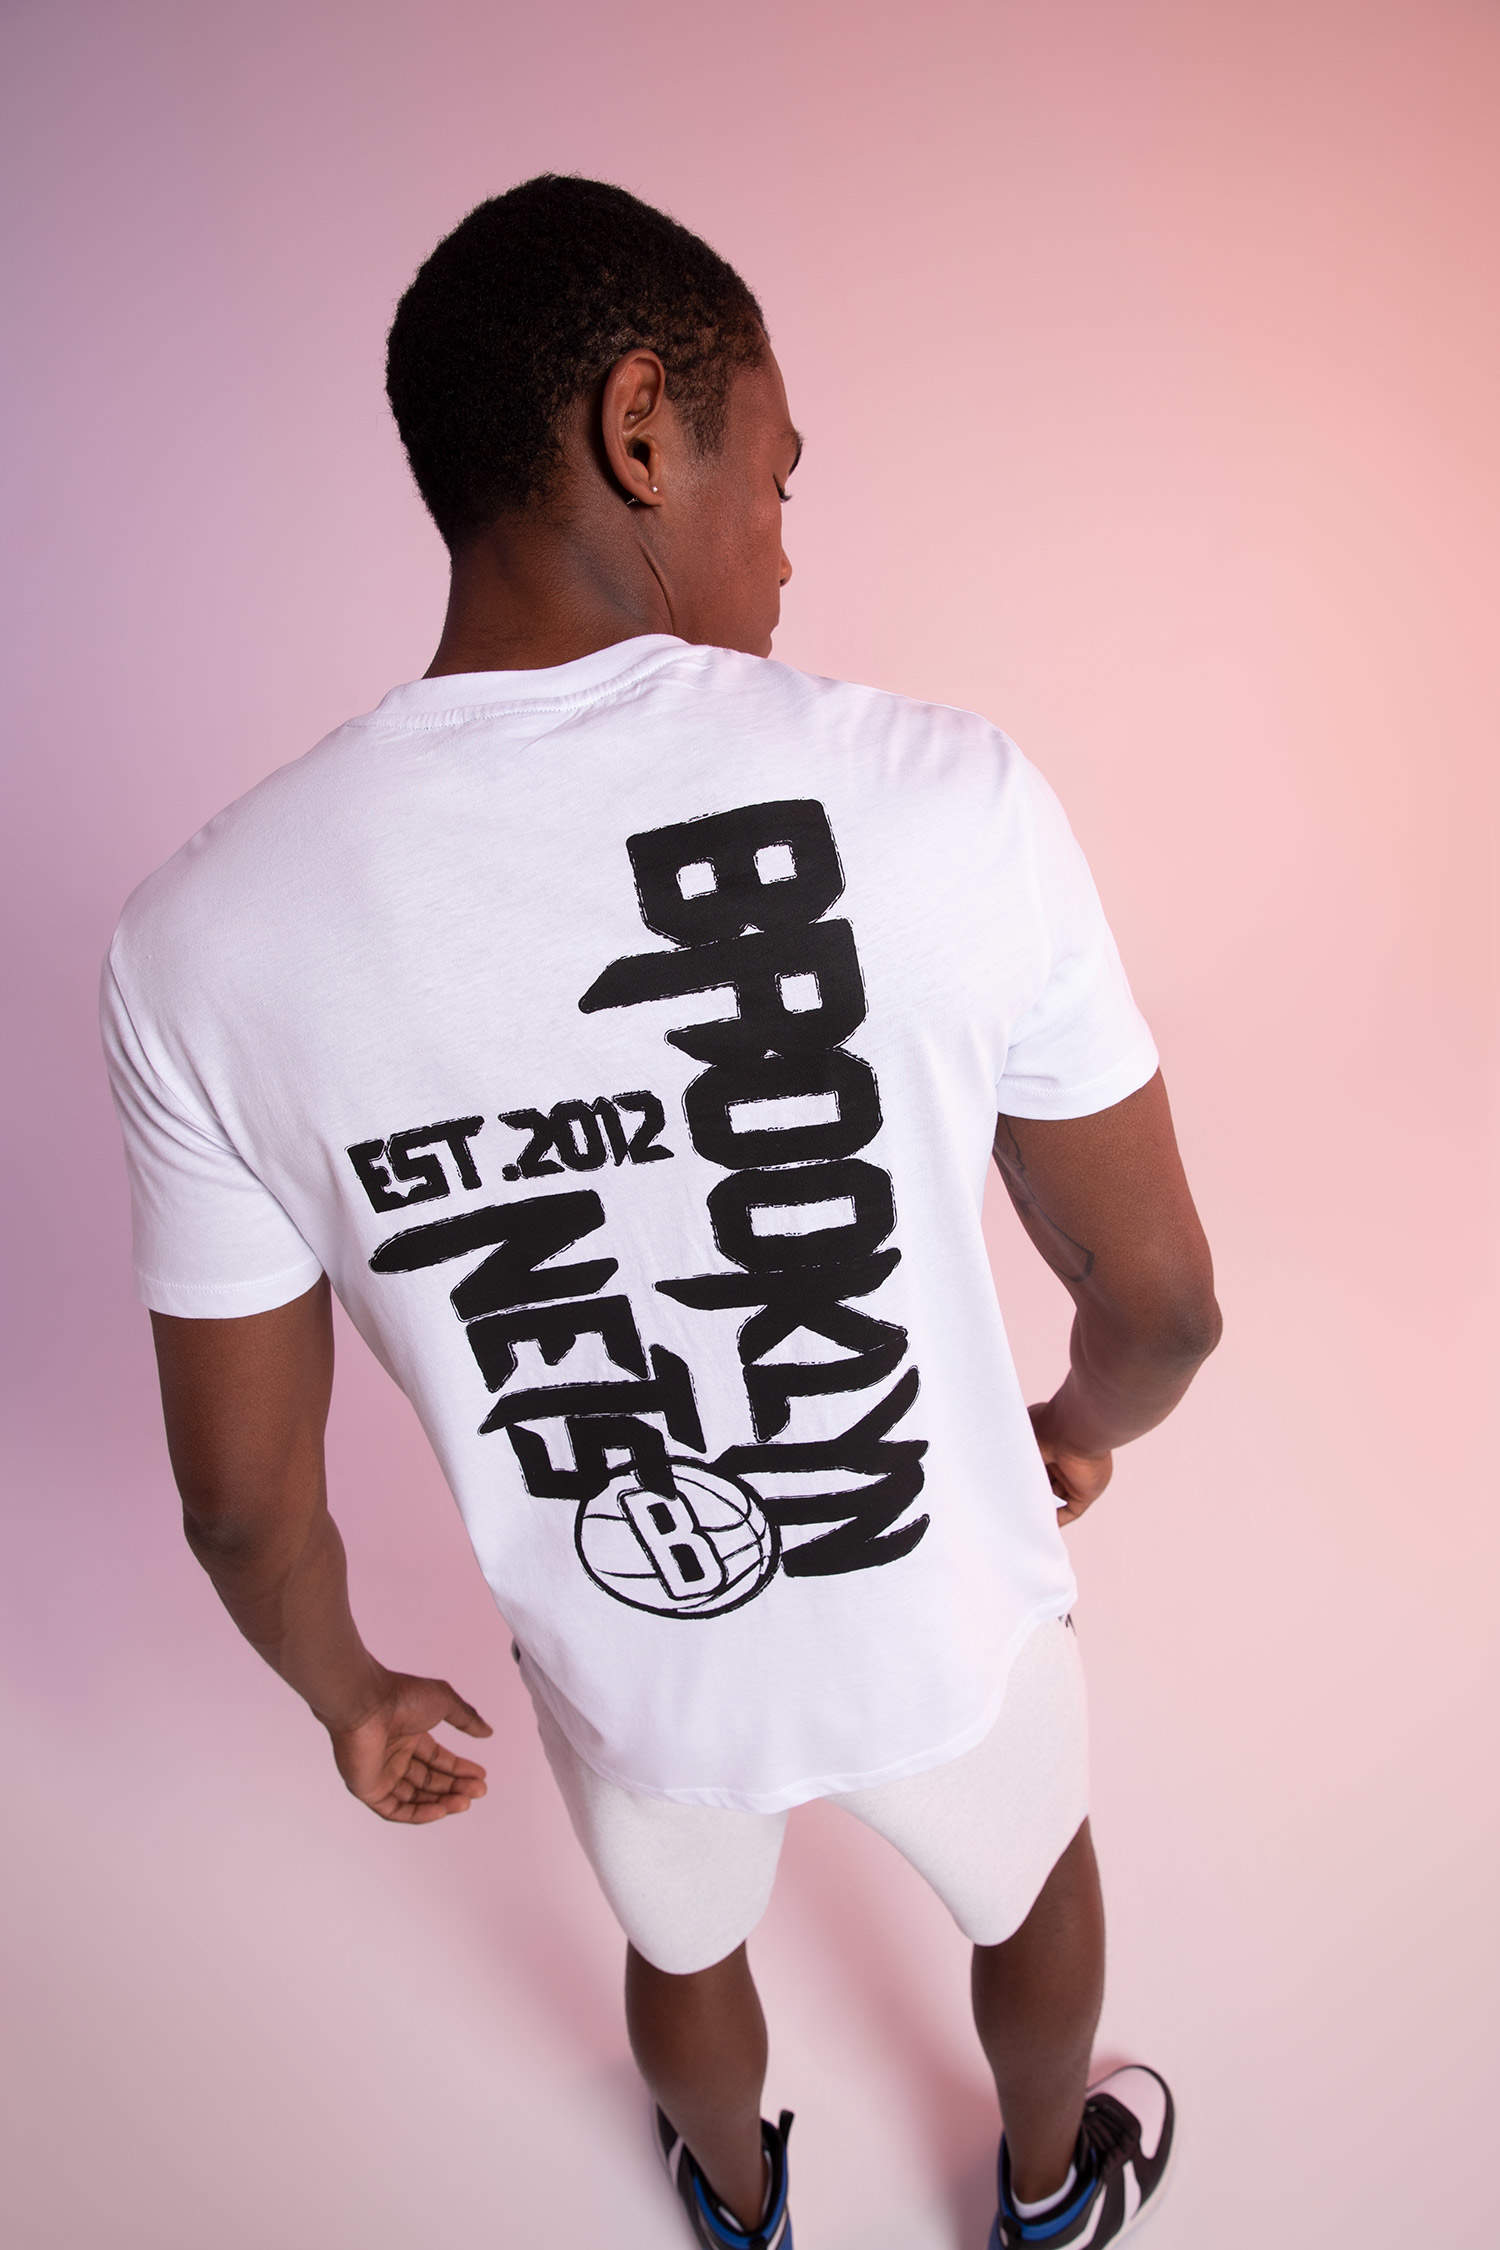 Brooklyn Nets Licensed T-Shirt